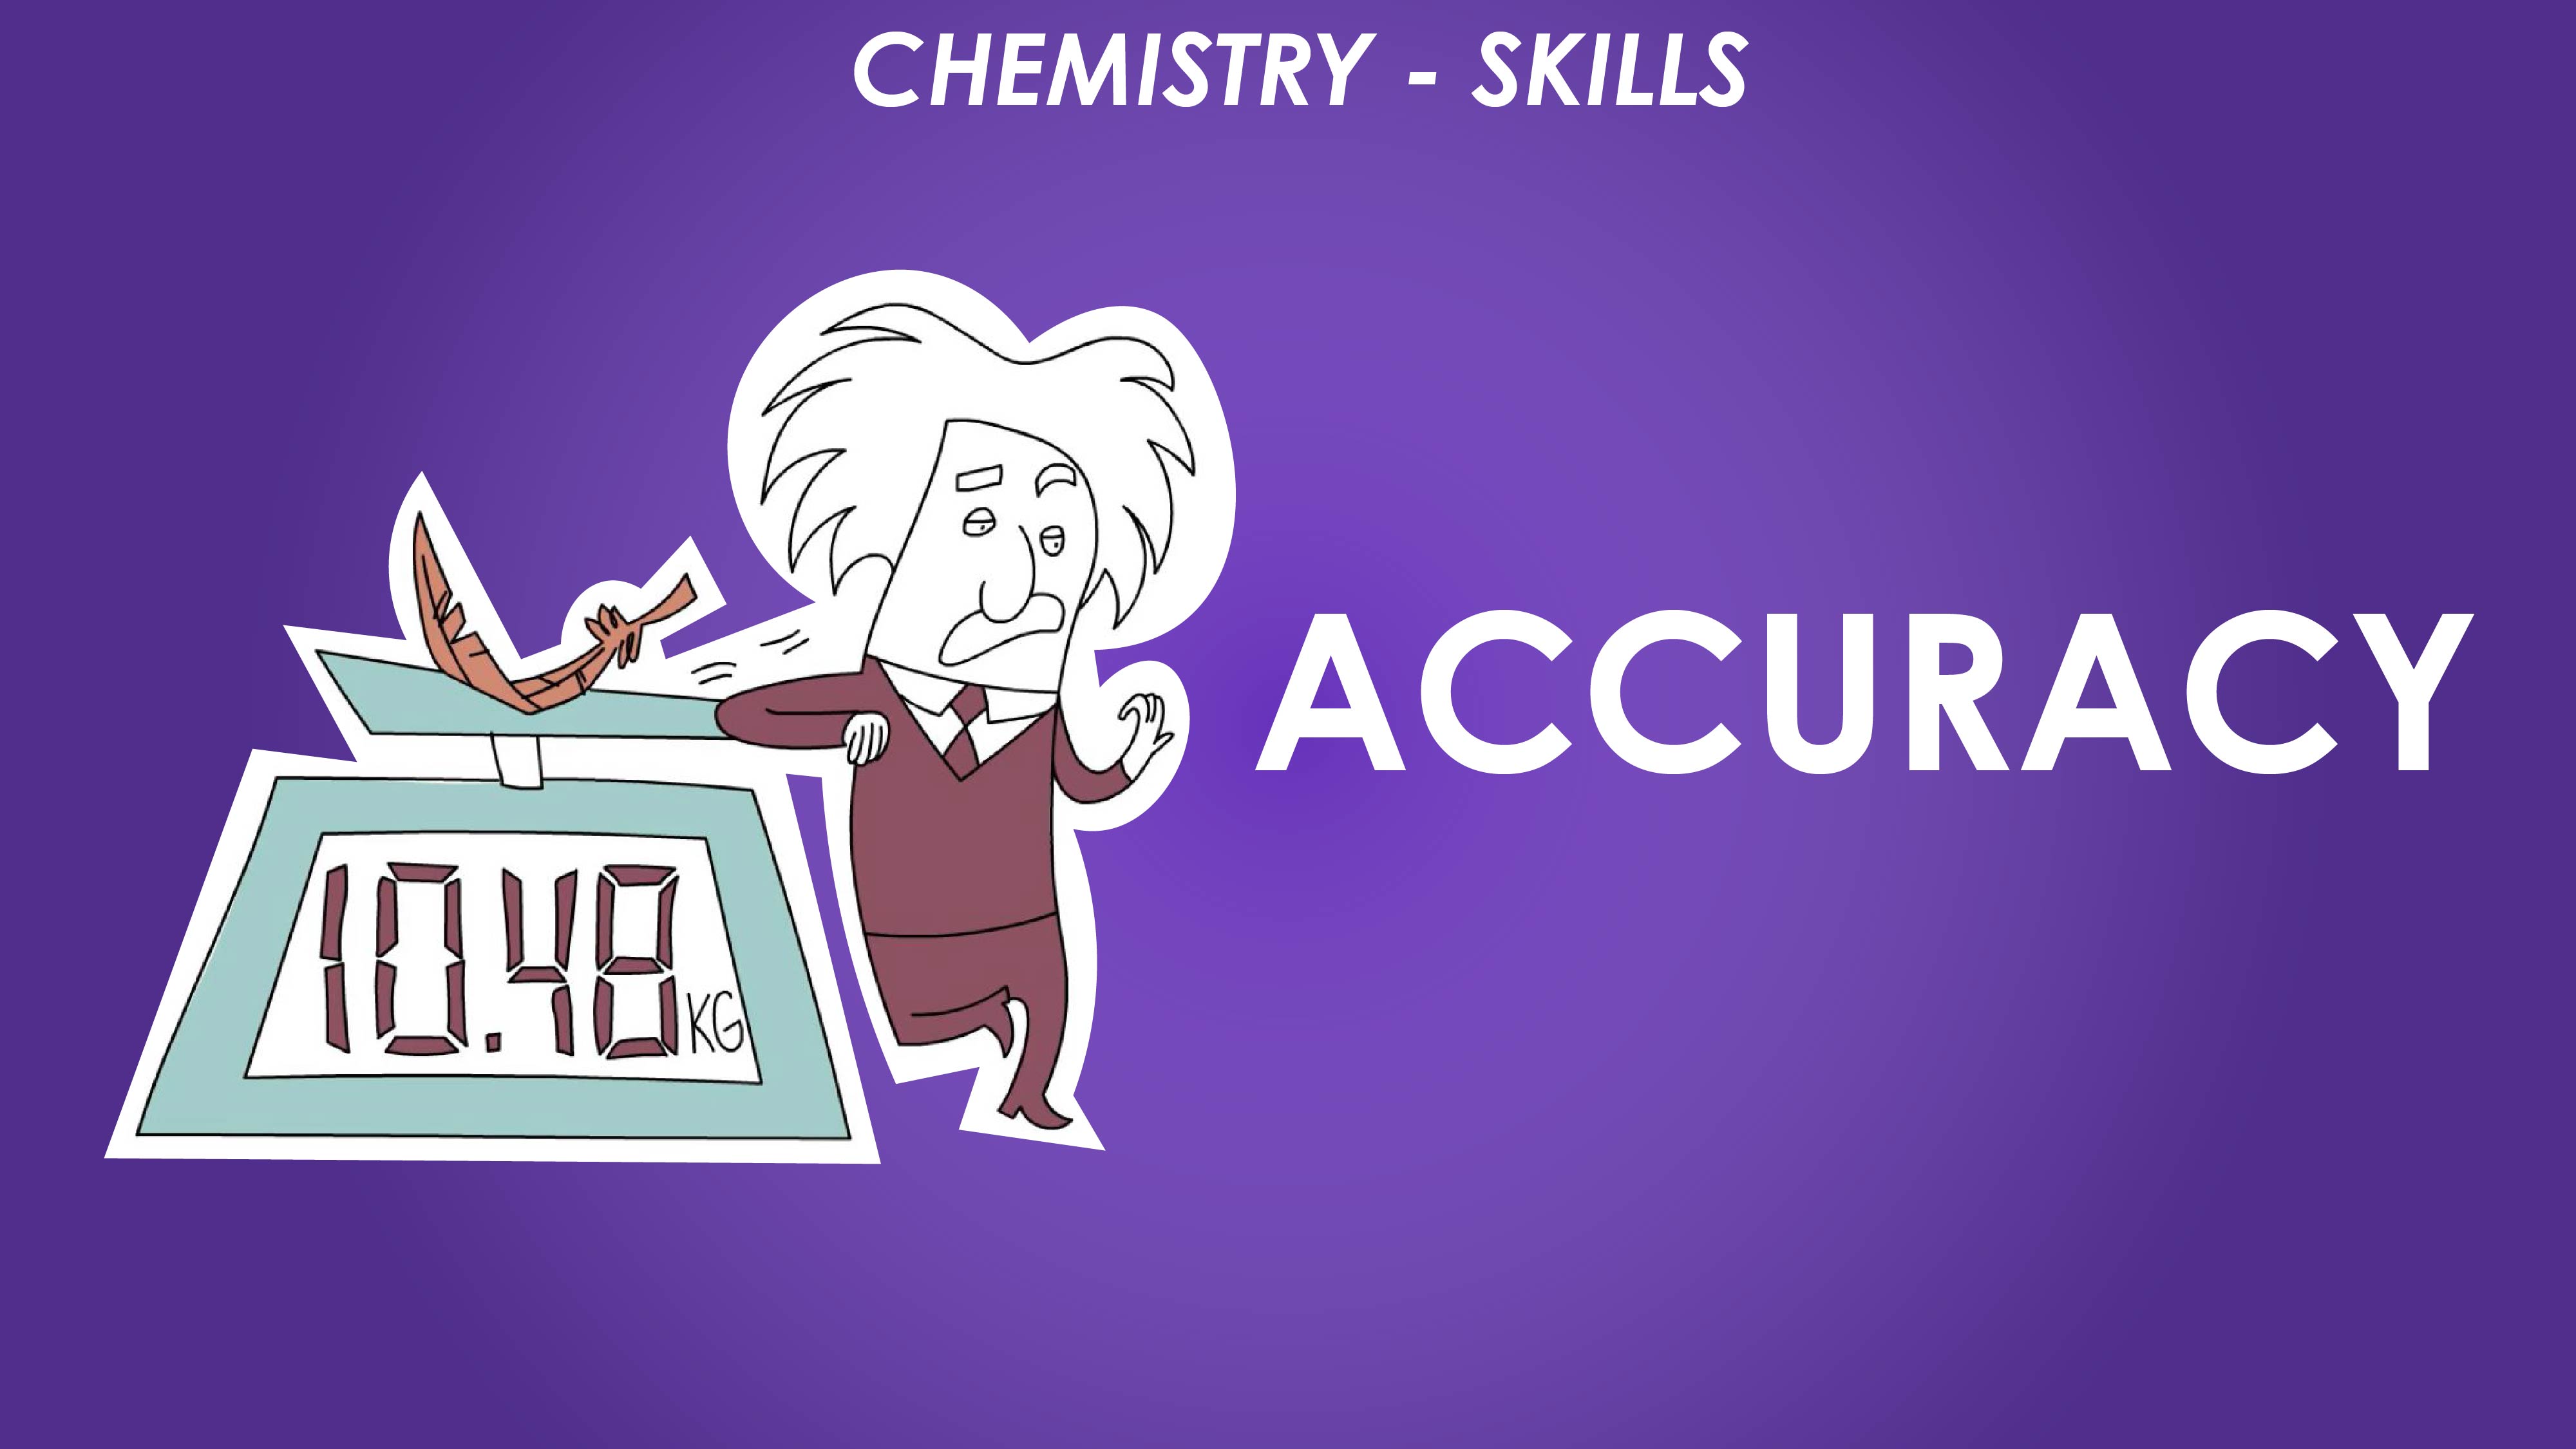 Accuracy - Chemistry Skills